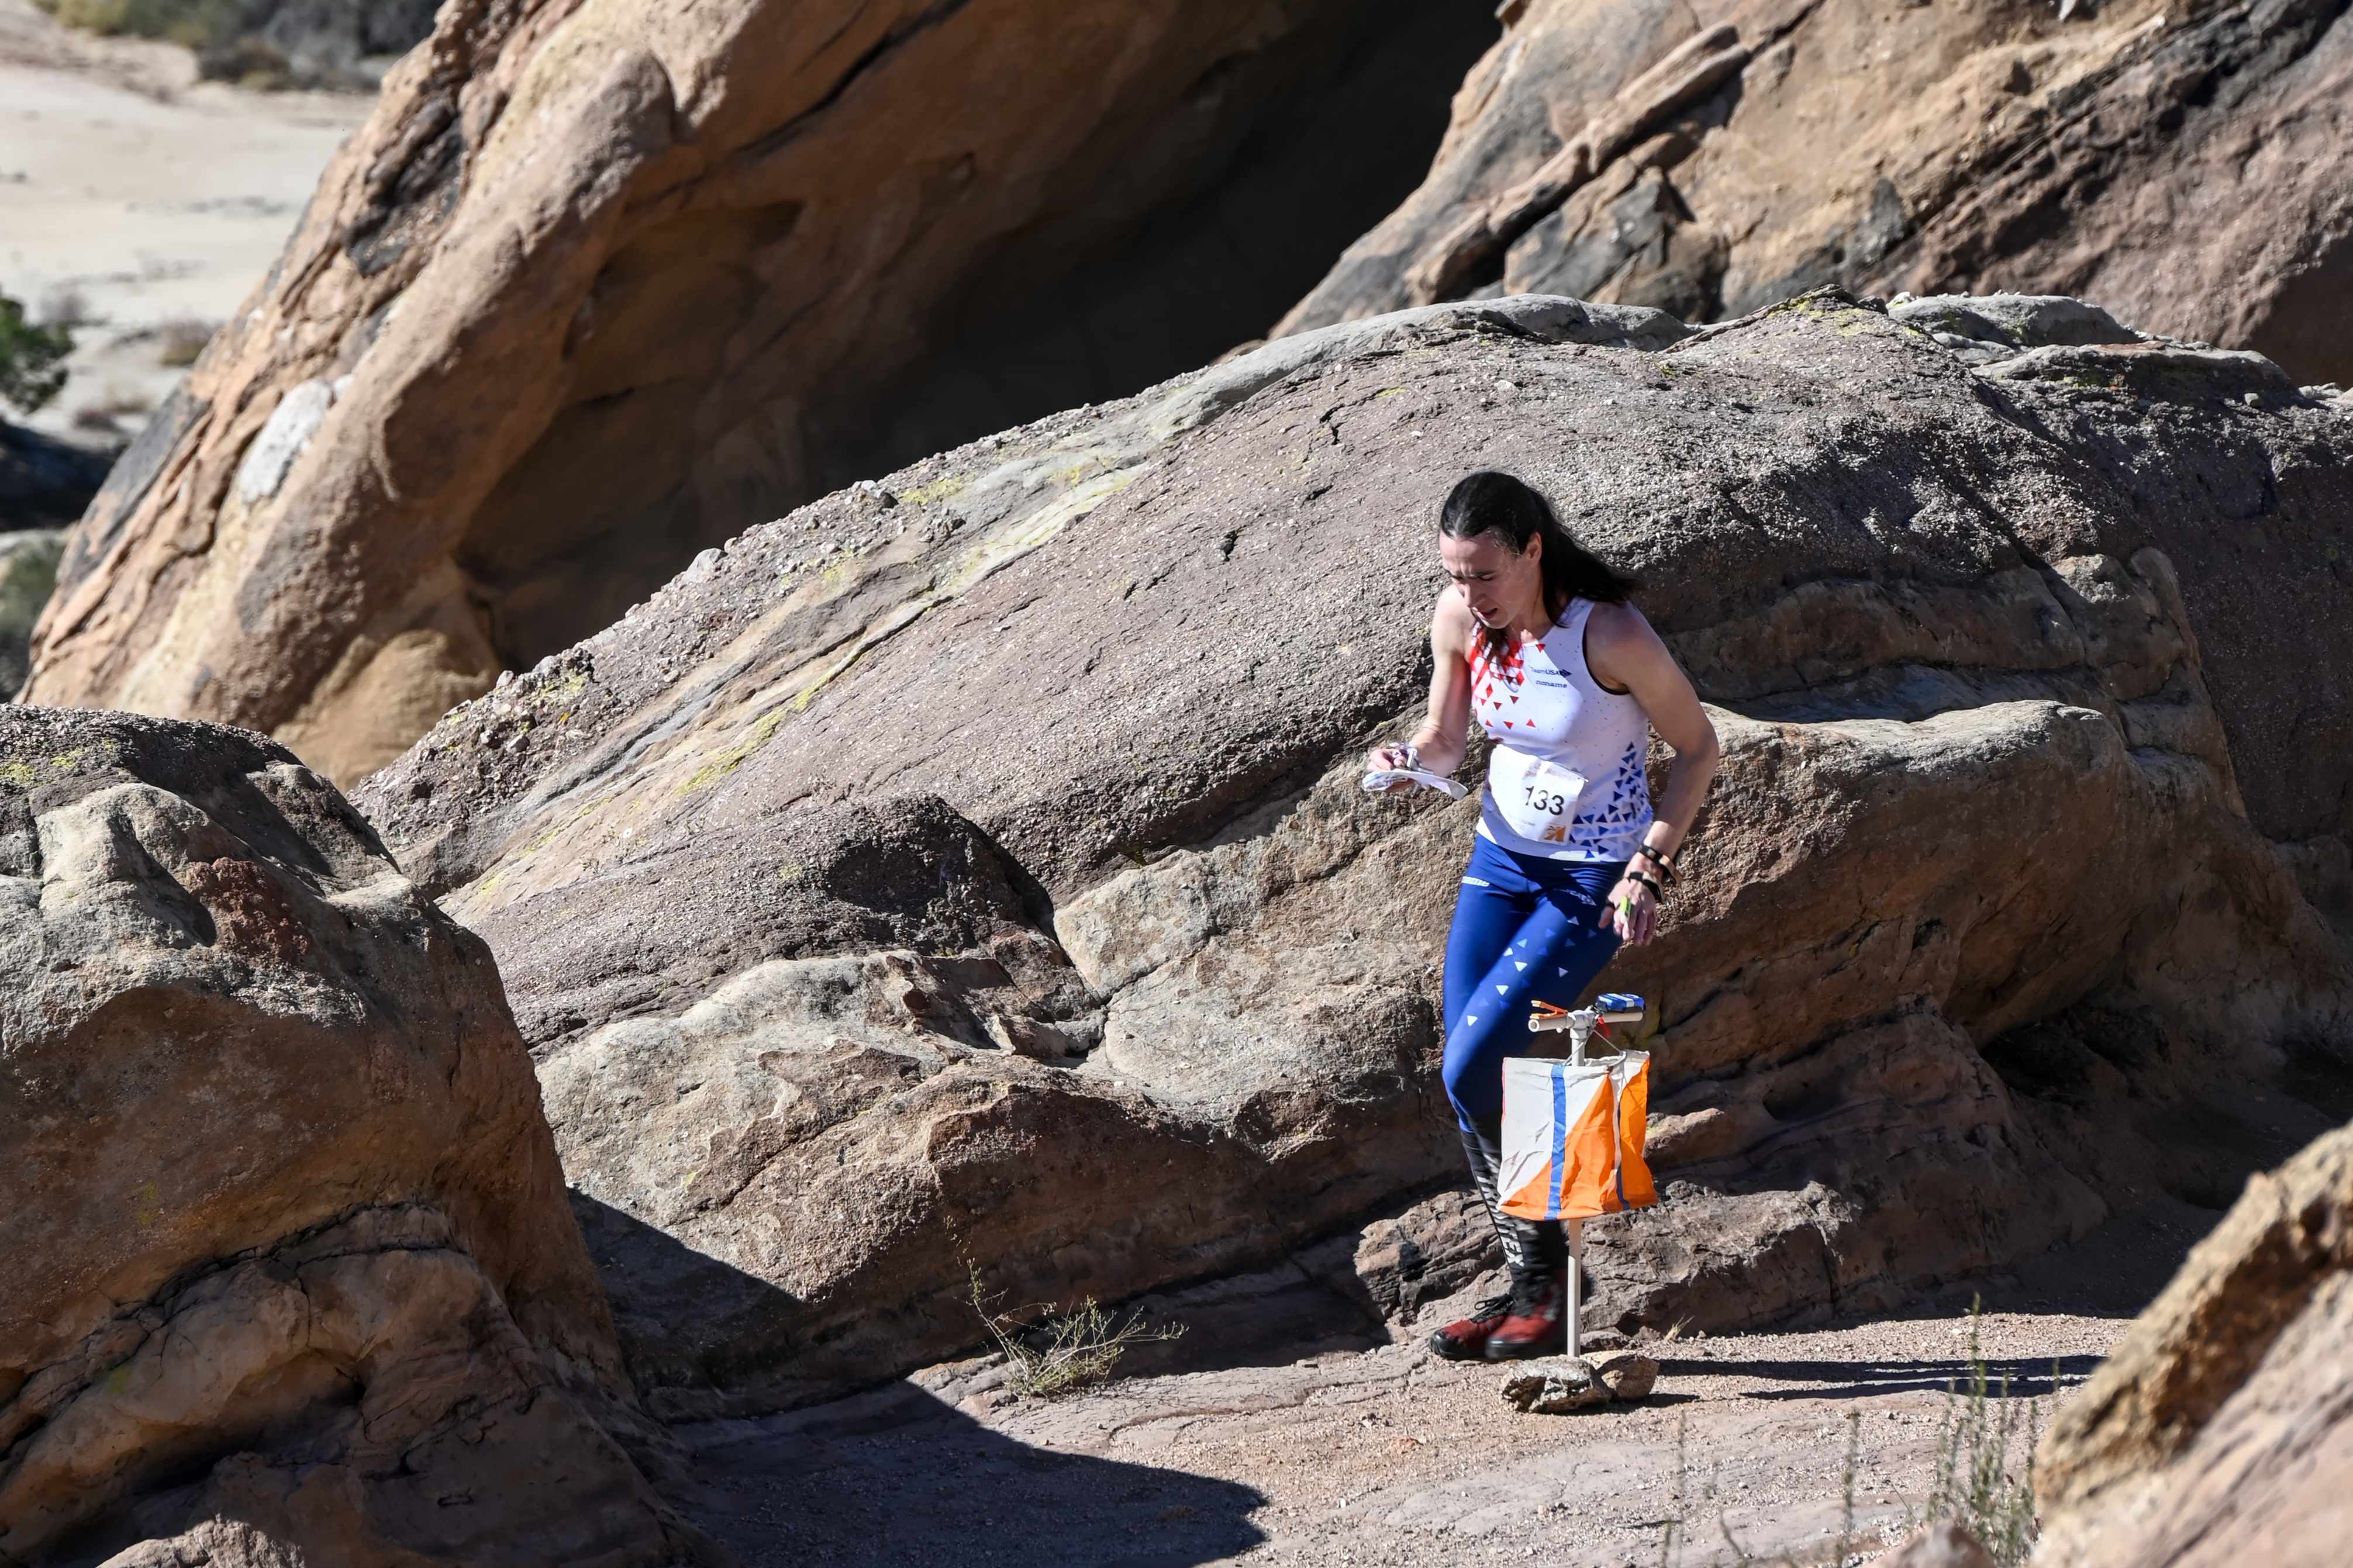 TeamUSA ایلیٹ اسکواڈ کے رکن ایلیسن کروکر (OR) Vasquez Rocks Natural Area (Agua Dulce, CA) کی پیچیدہ راک تفصیل کی تشریح کرنے کے لیے مختصراً سست ہو جاتے ہیں۔  ایلیسن خواتین کا یہ ایلیٹ کورس جیت کر 2022 کے لیے یو ایس مڈل ڈسٹنس چیمپیئن بننے کا اعزاز حاصل کرے گی۔ (اورینٹیرنگ USA)